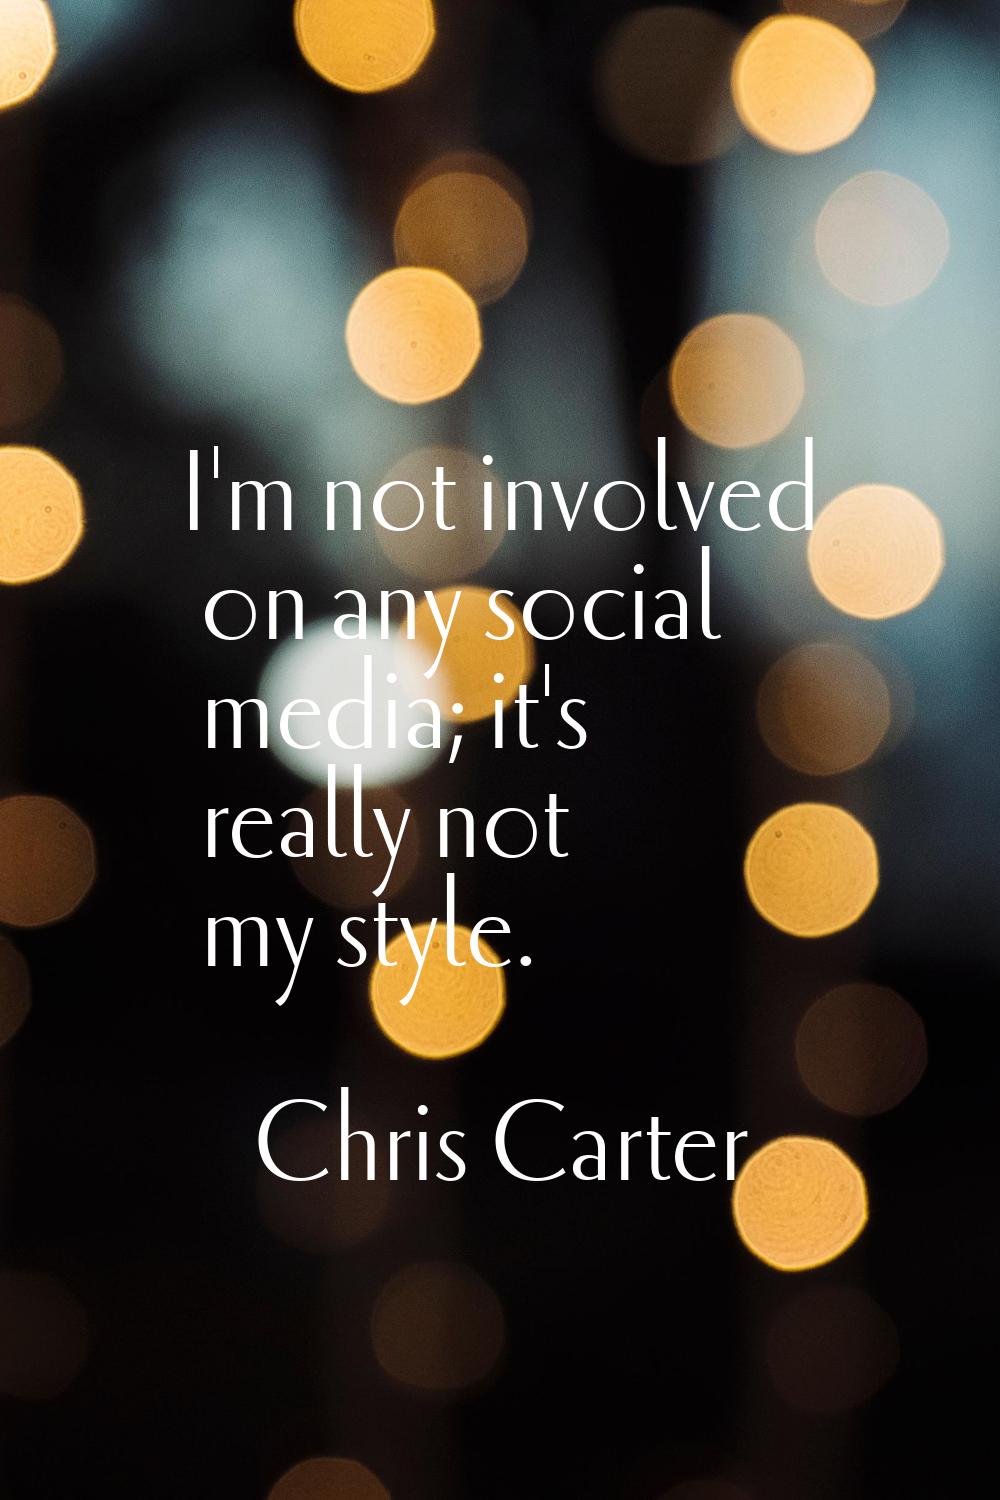 I'm not involved on any social media; it's really not my style.